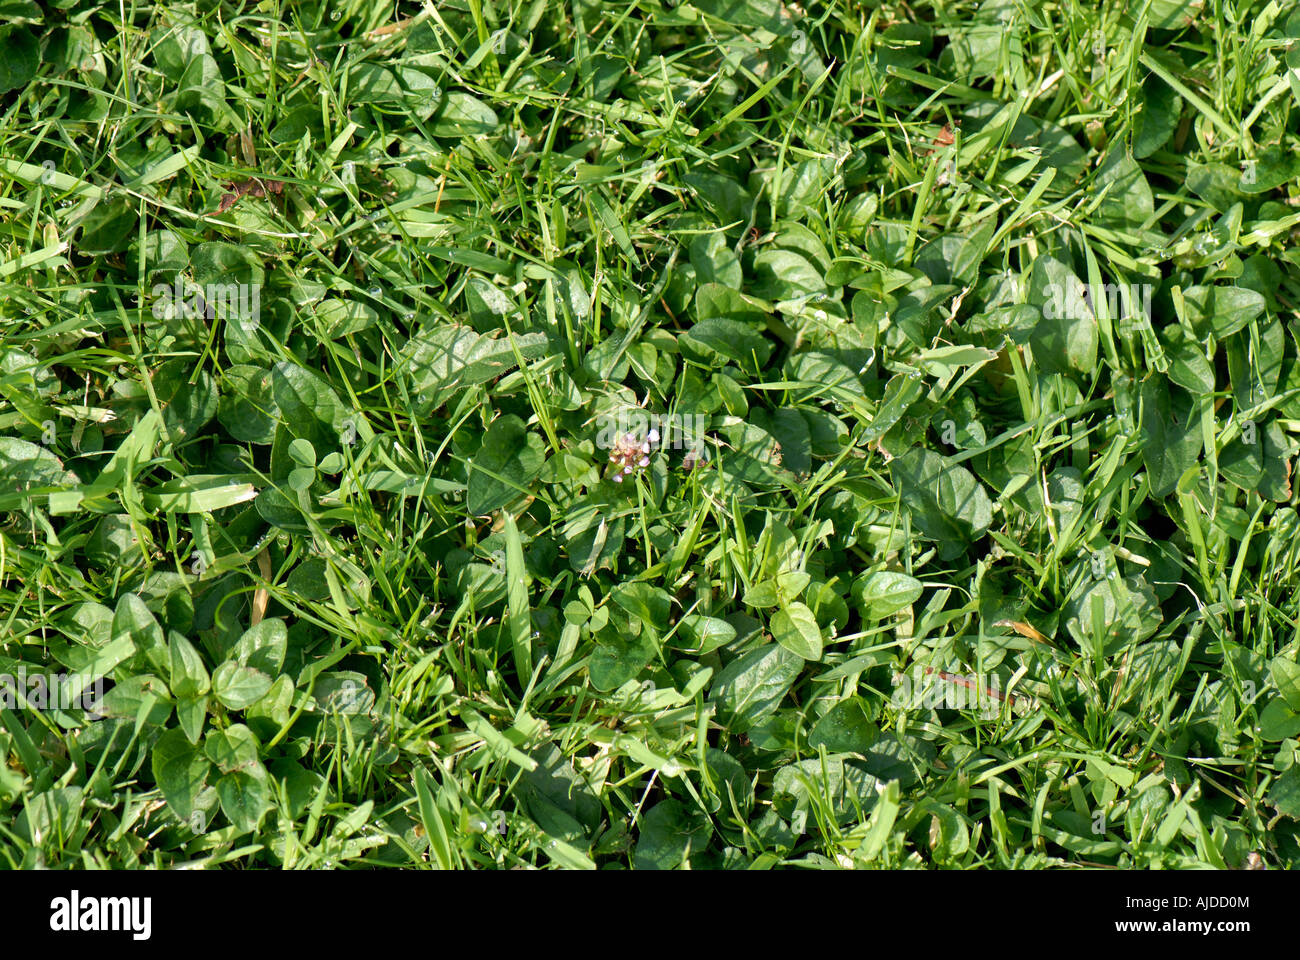 Self heal Prunella vulgaris plants in rough cut garden lawn Stock Photo